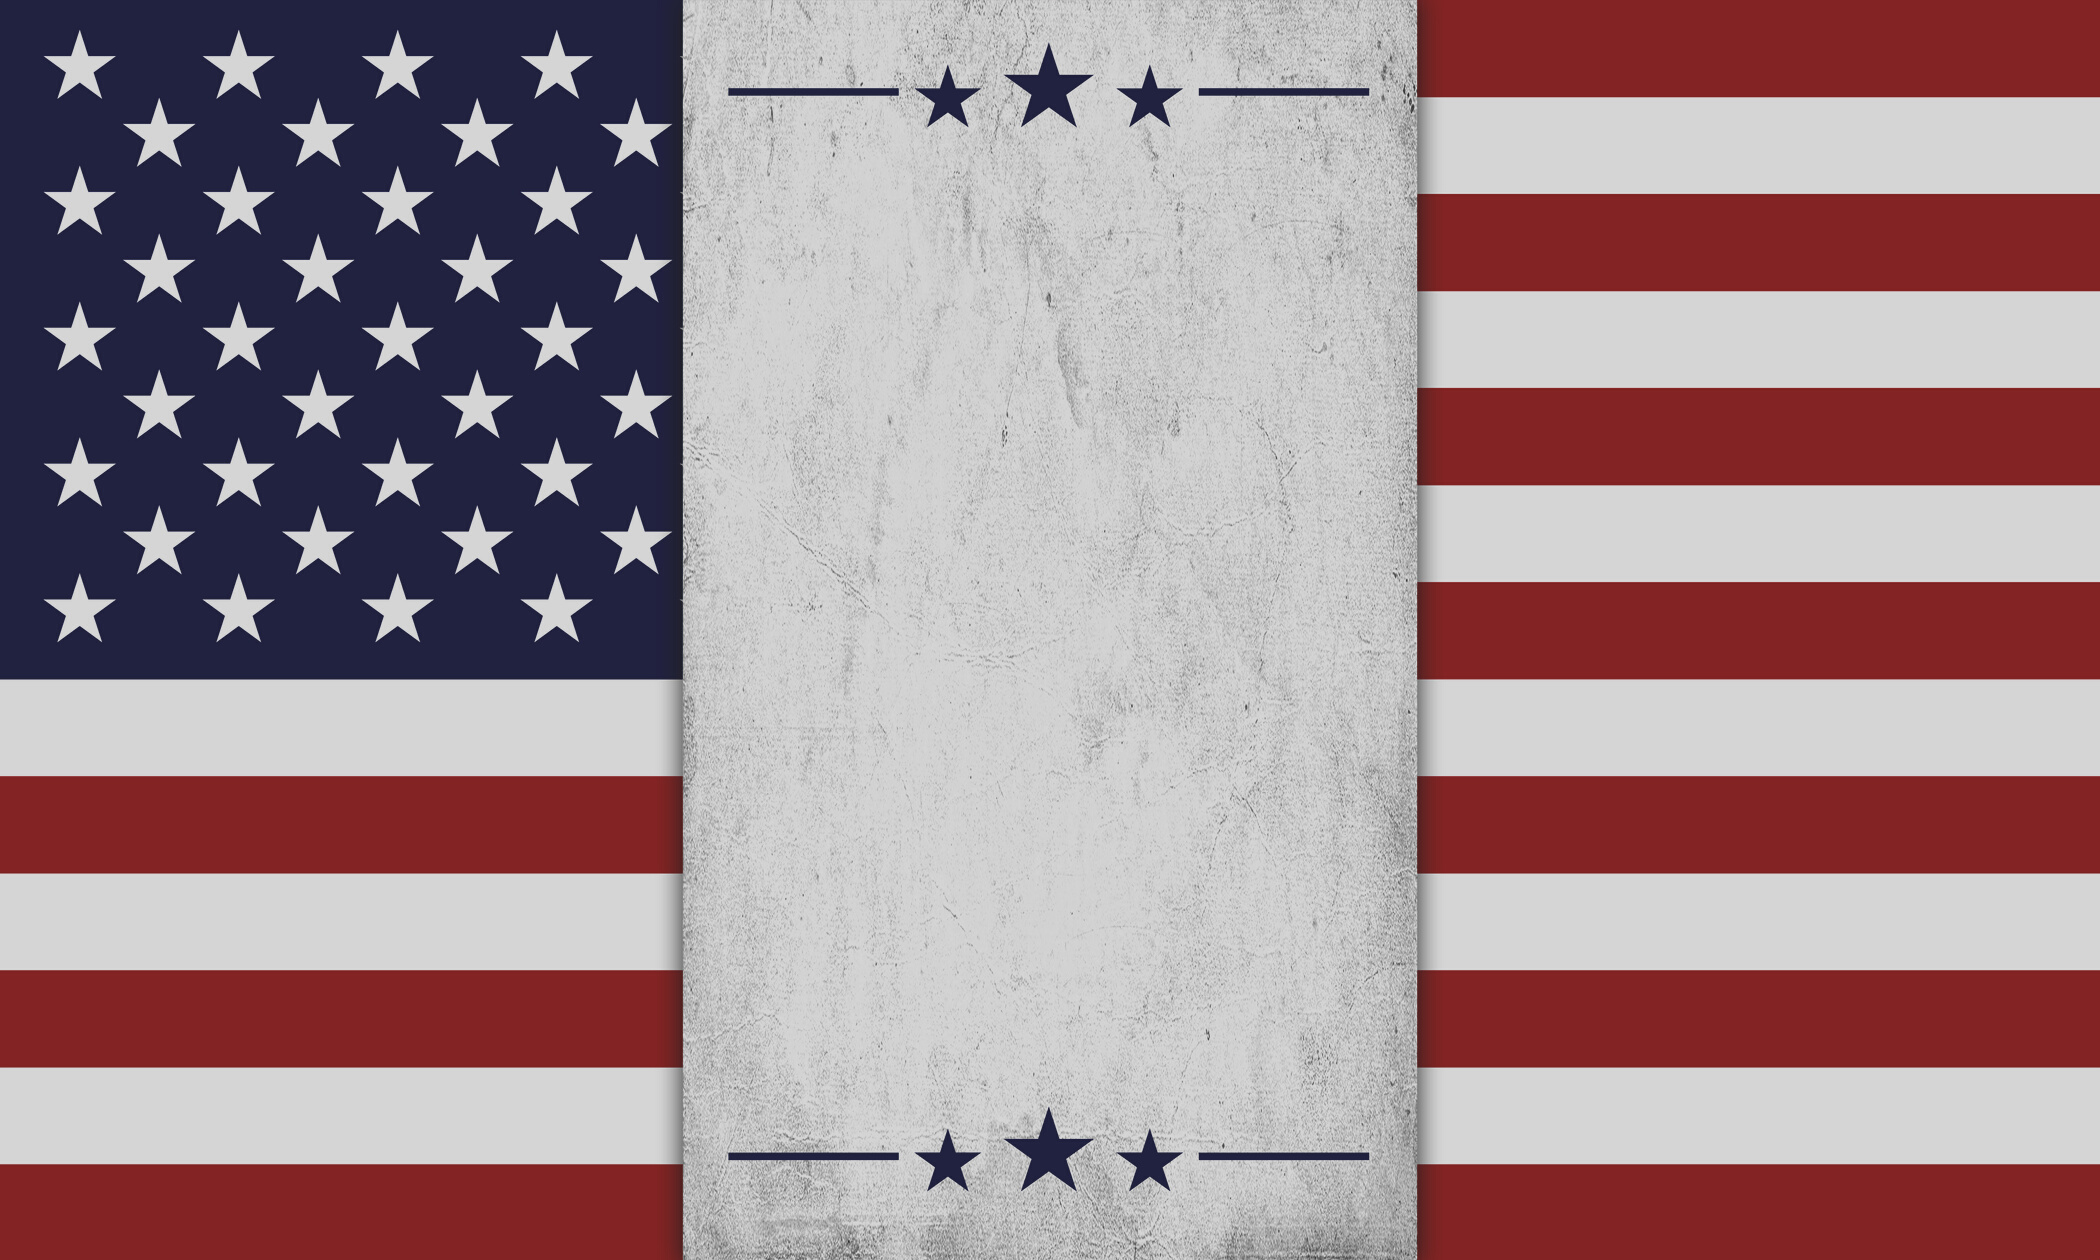 USA Patriotic wooden background